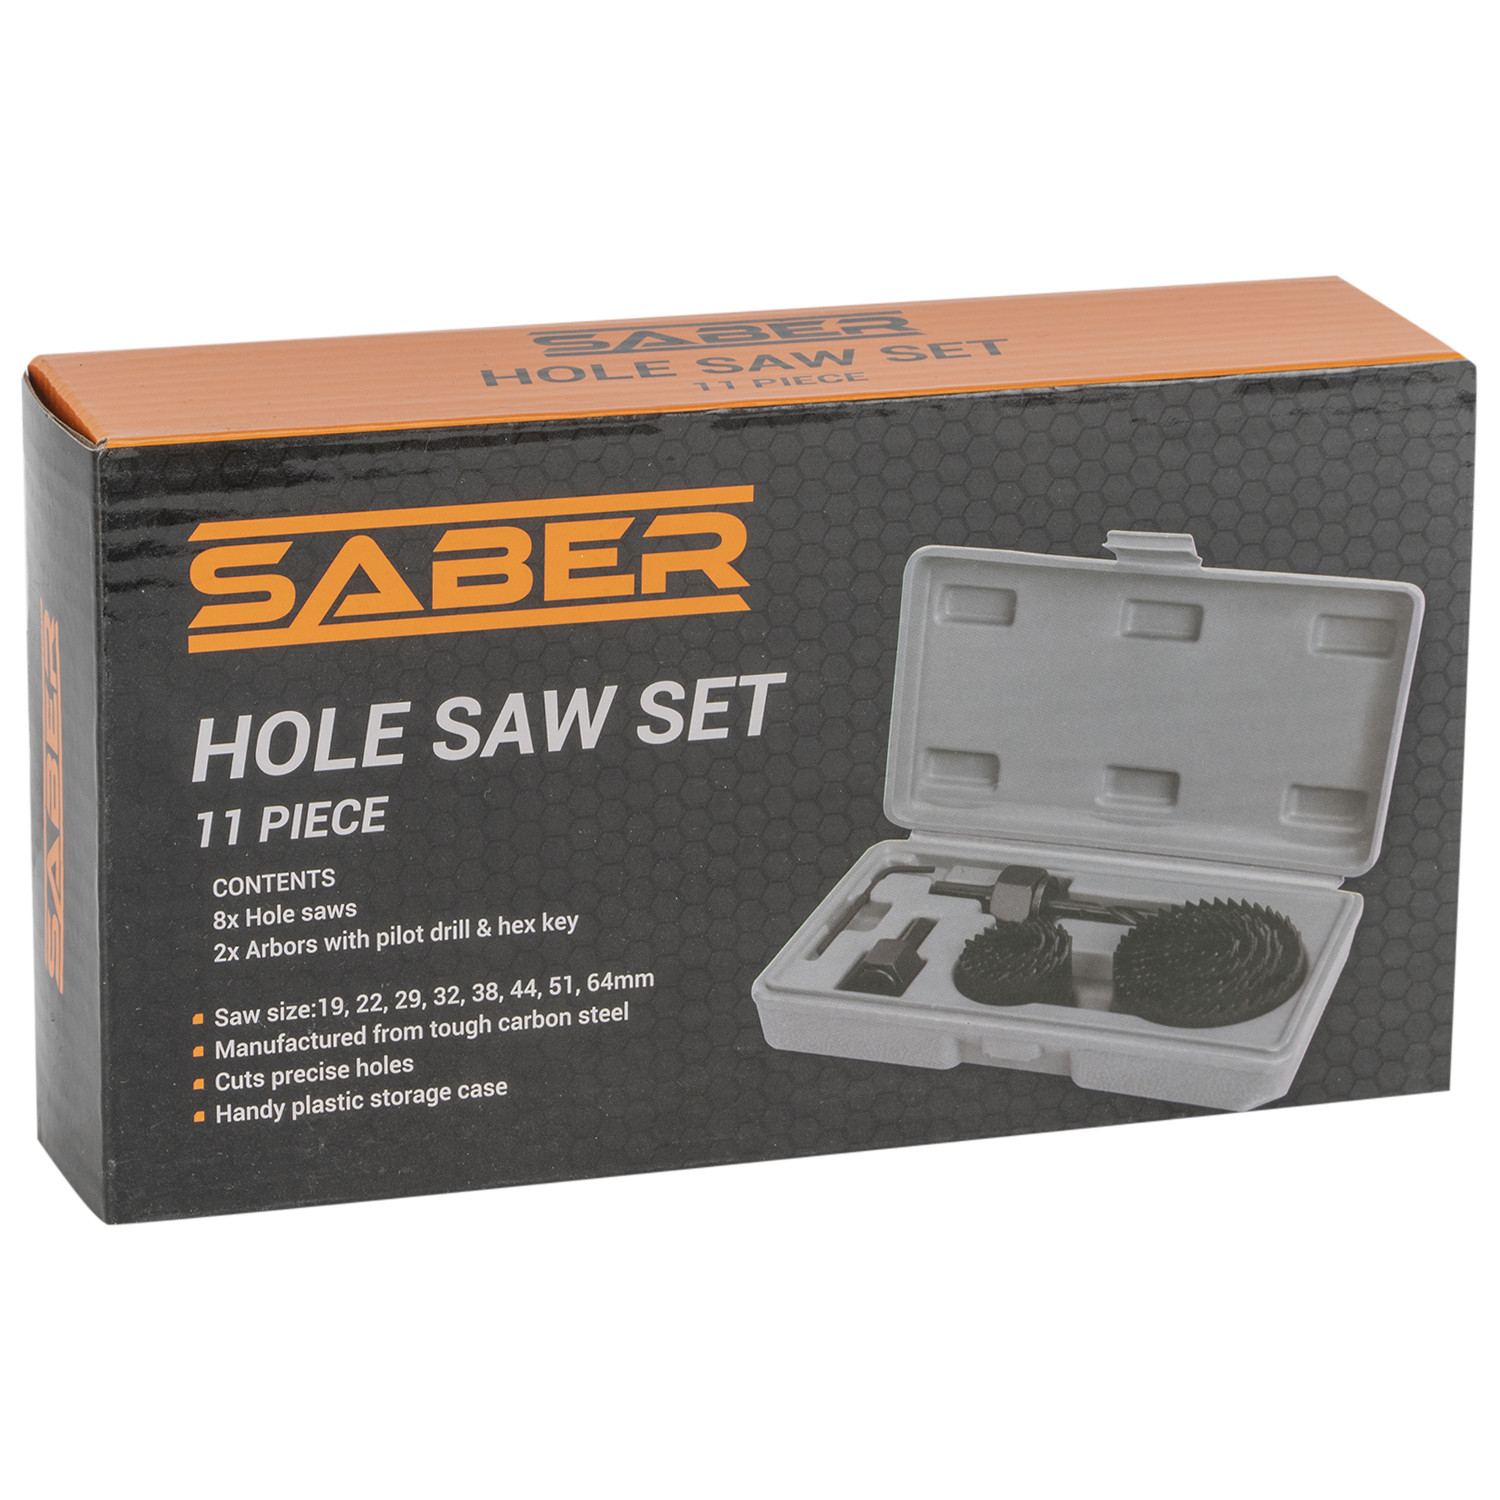 Saber 11 Piece Hole Saw Set In Case Image